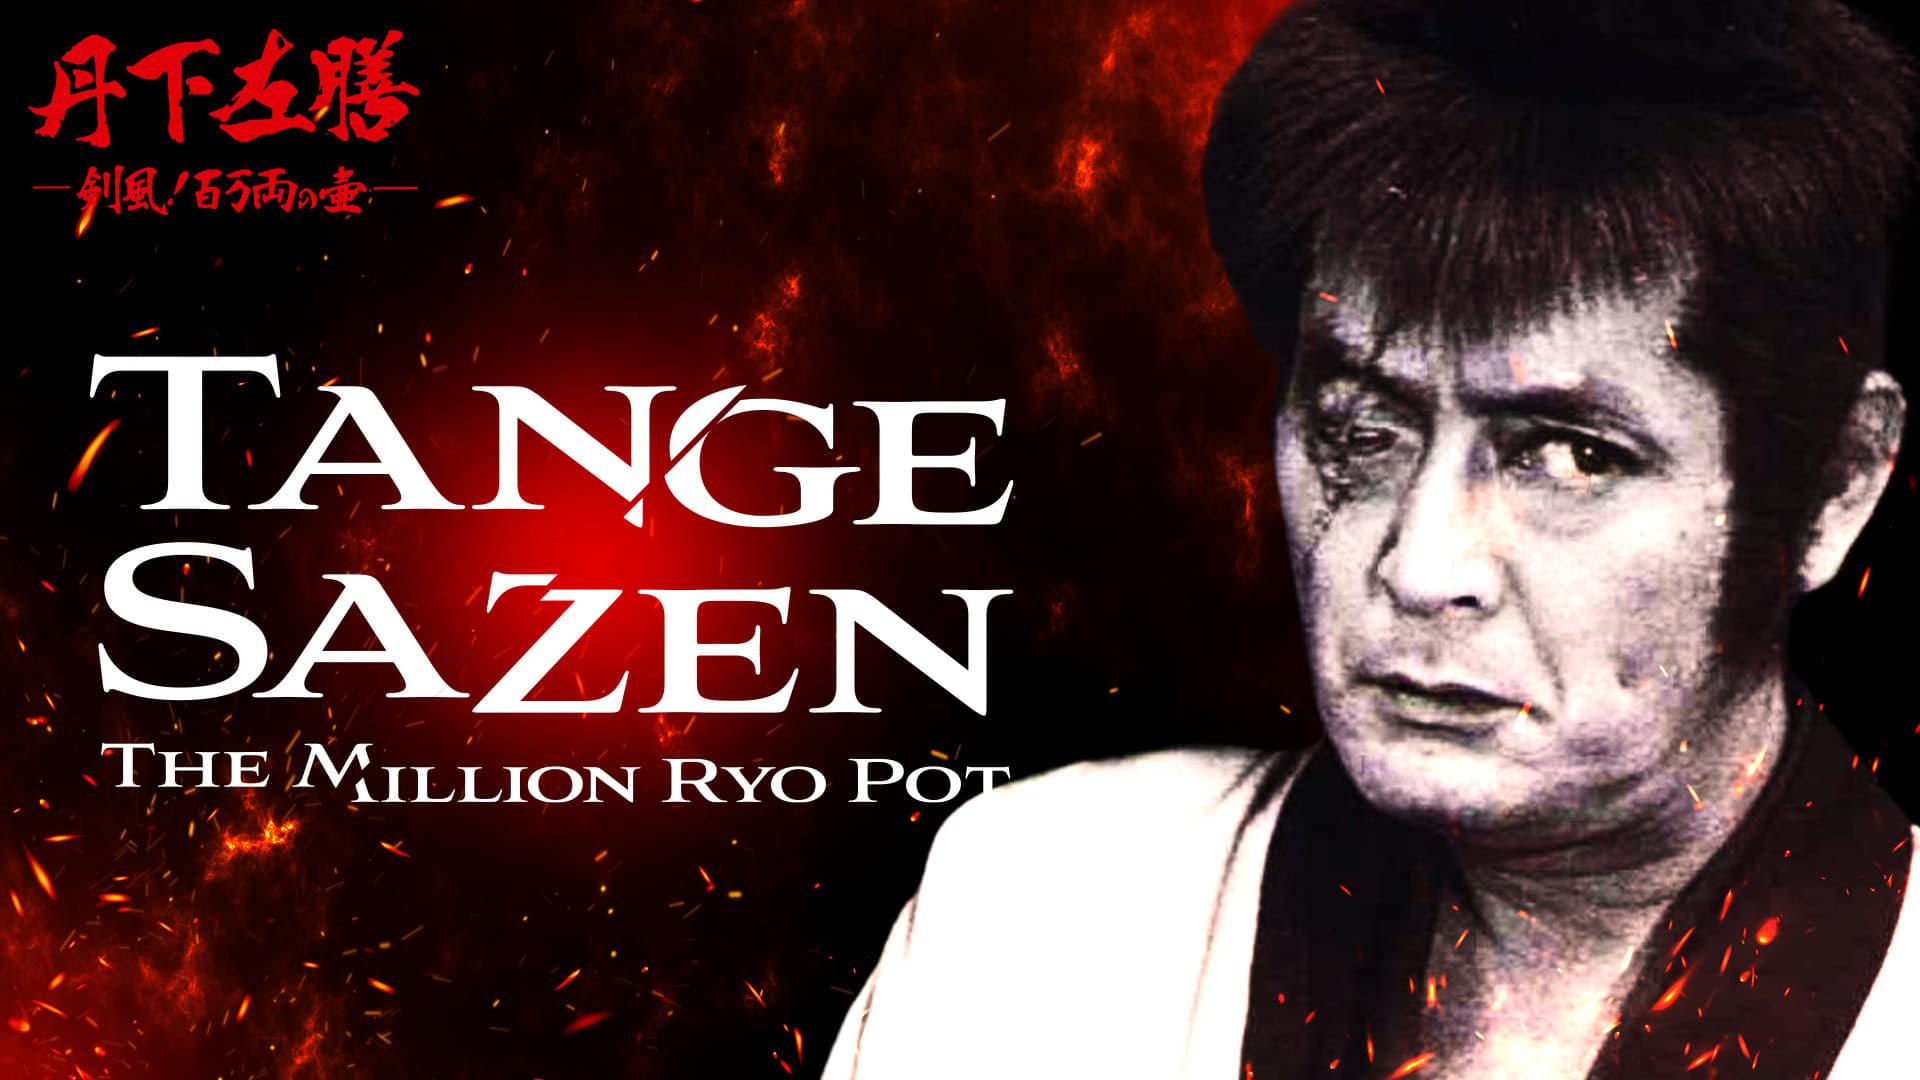 Sazen Tange and the Pot Worth a Million Ryo backdrop